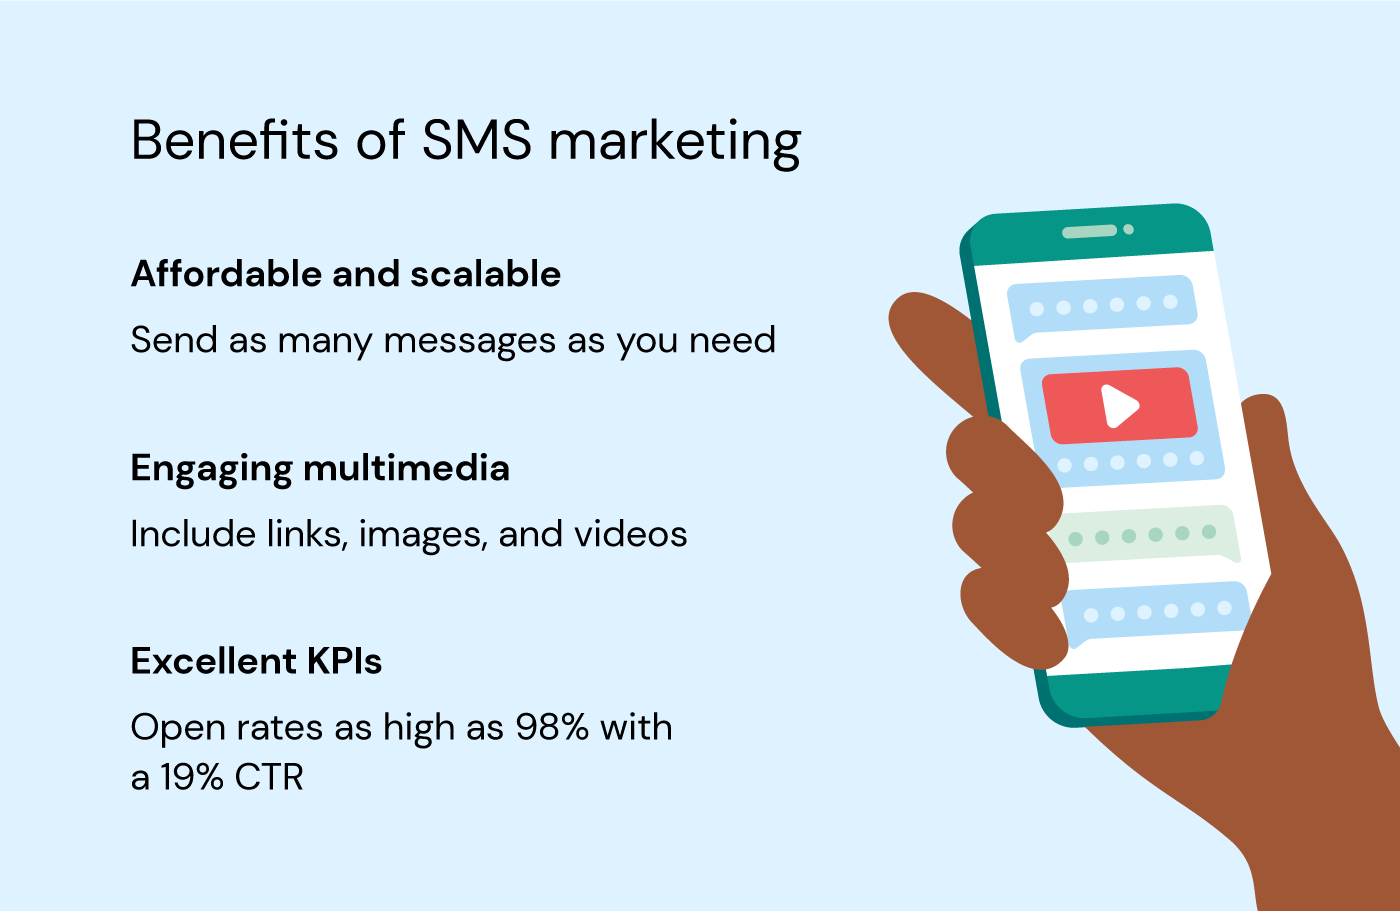 SMS marketing benefits